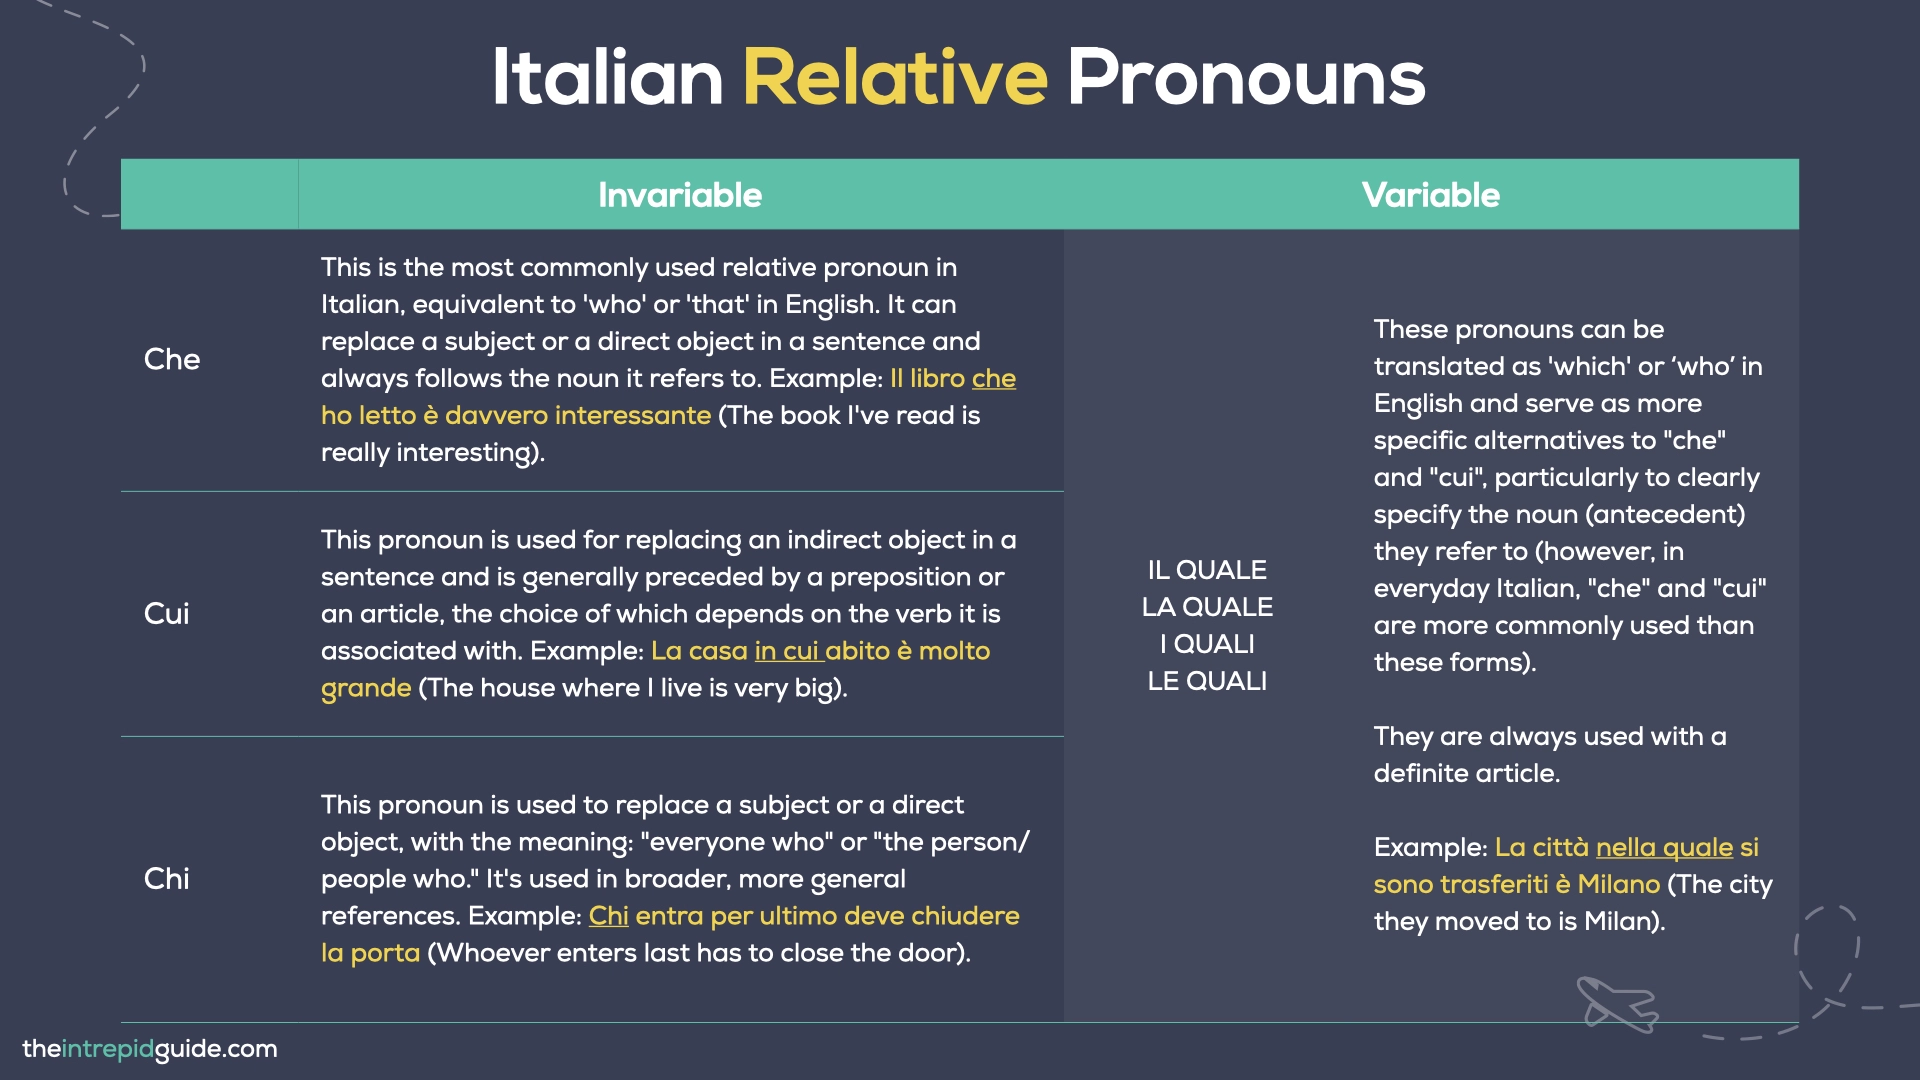 Italian Pronouns - Italian Relative Pronouns Chart